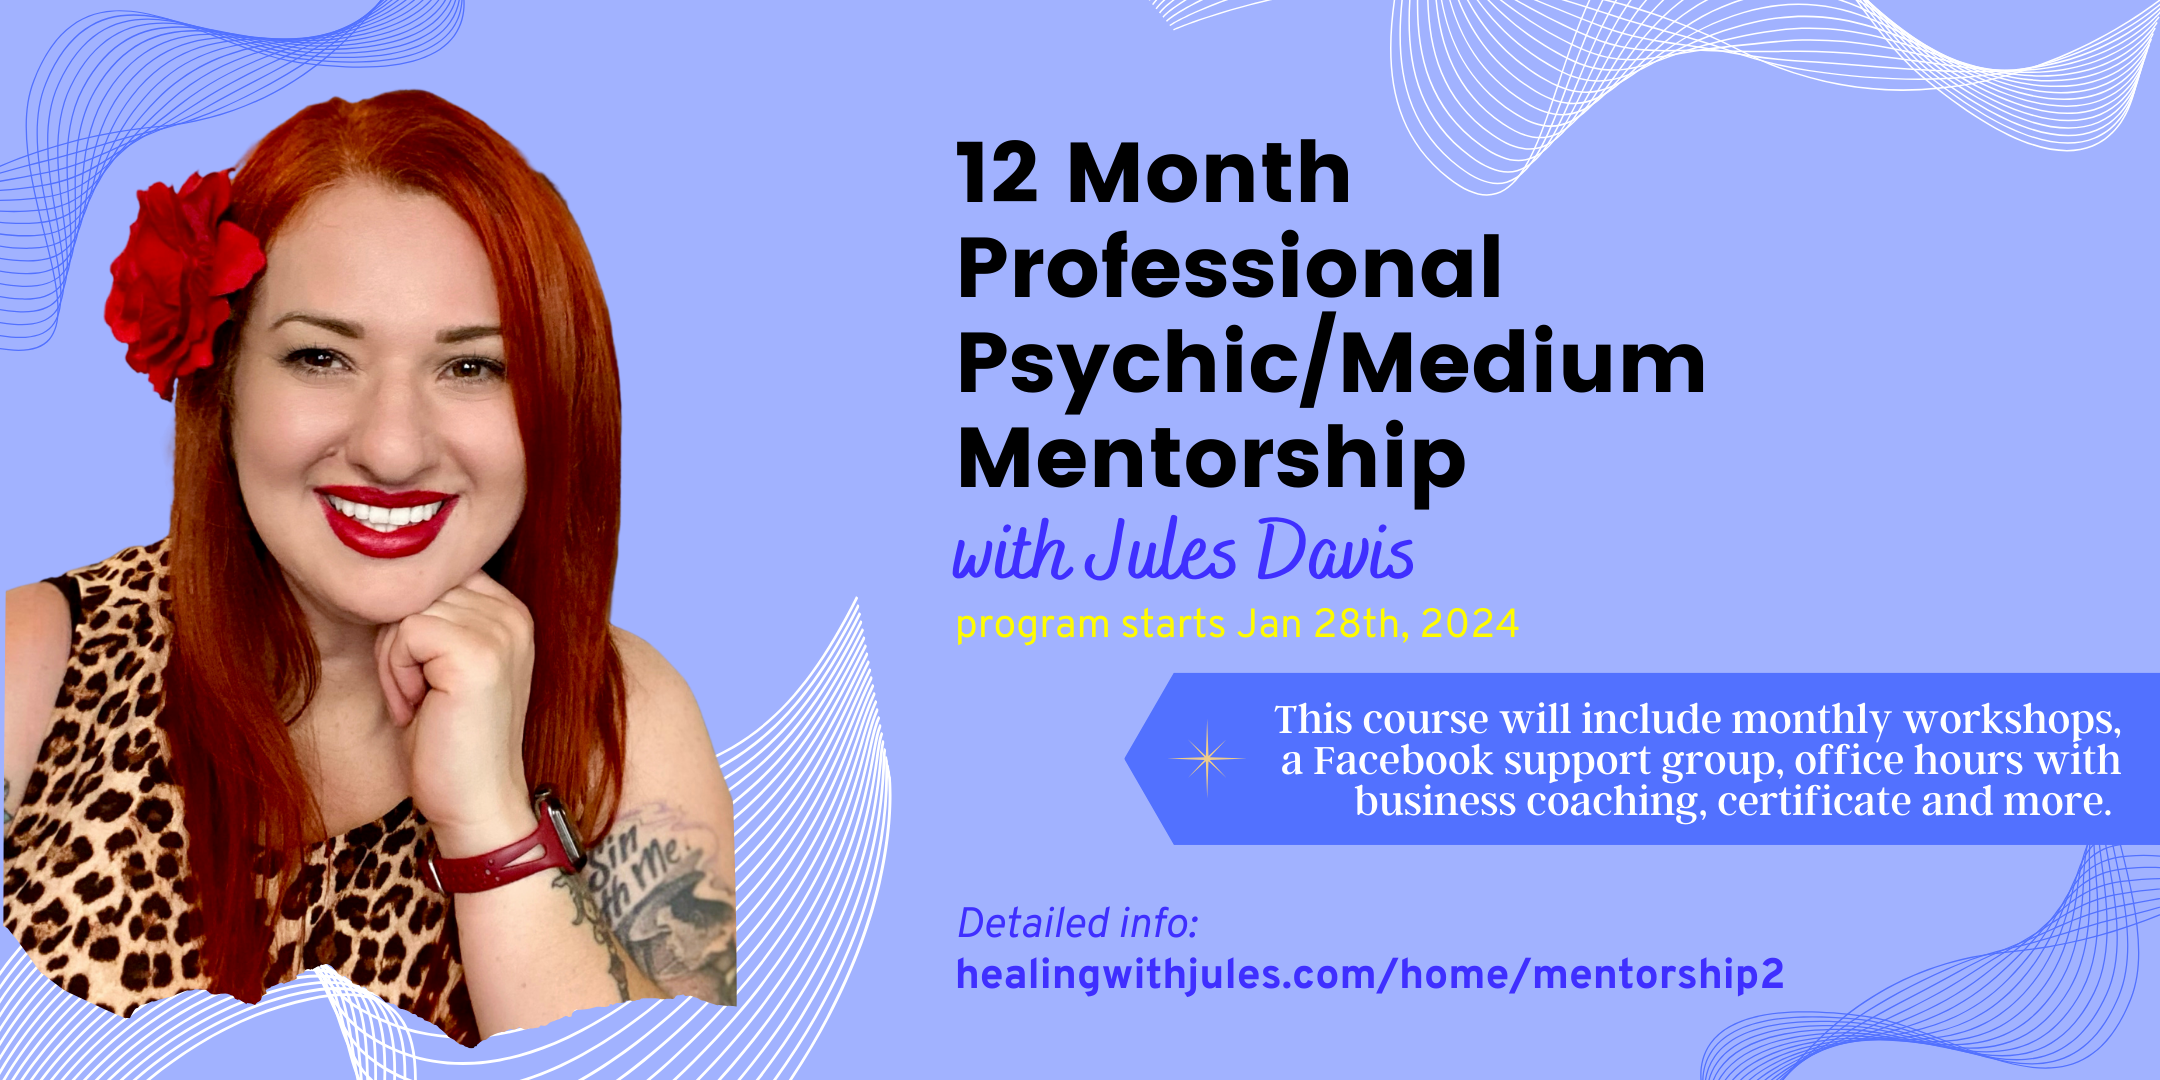 professional psychic medium mentorship with Jules Davis